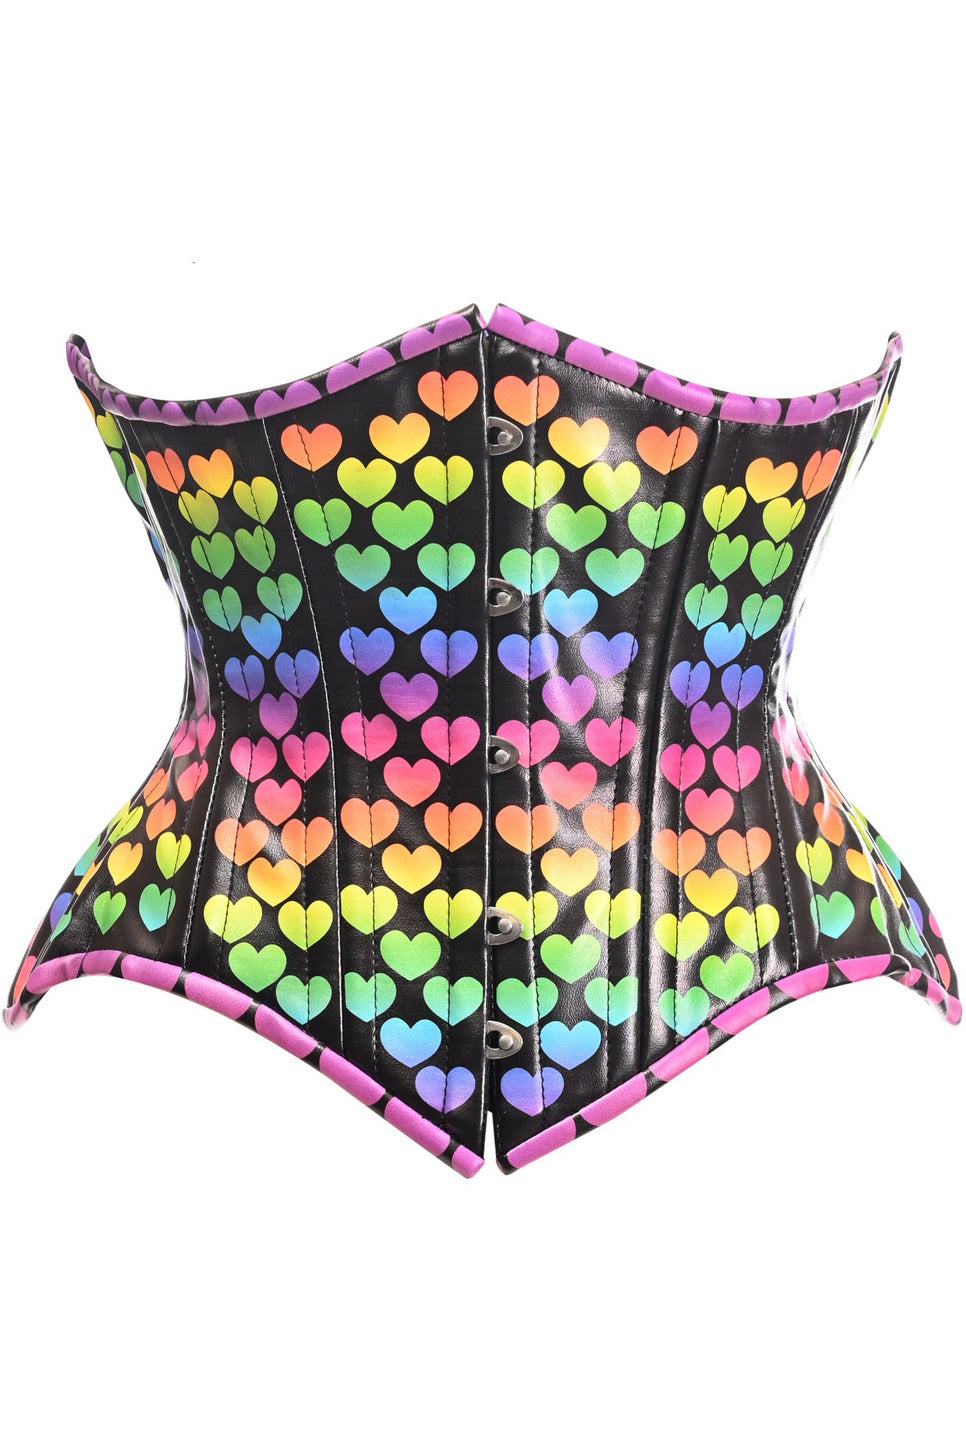 Top Drawer Rainbow Hearts Double Steel Boned Curvy Cut Underbust Cincher Corset - Lust Charm 